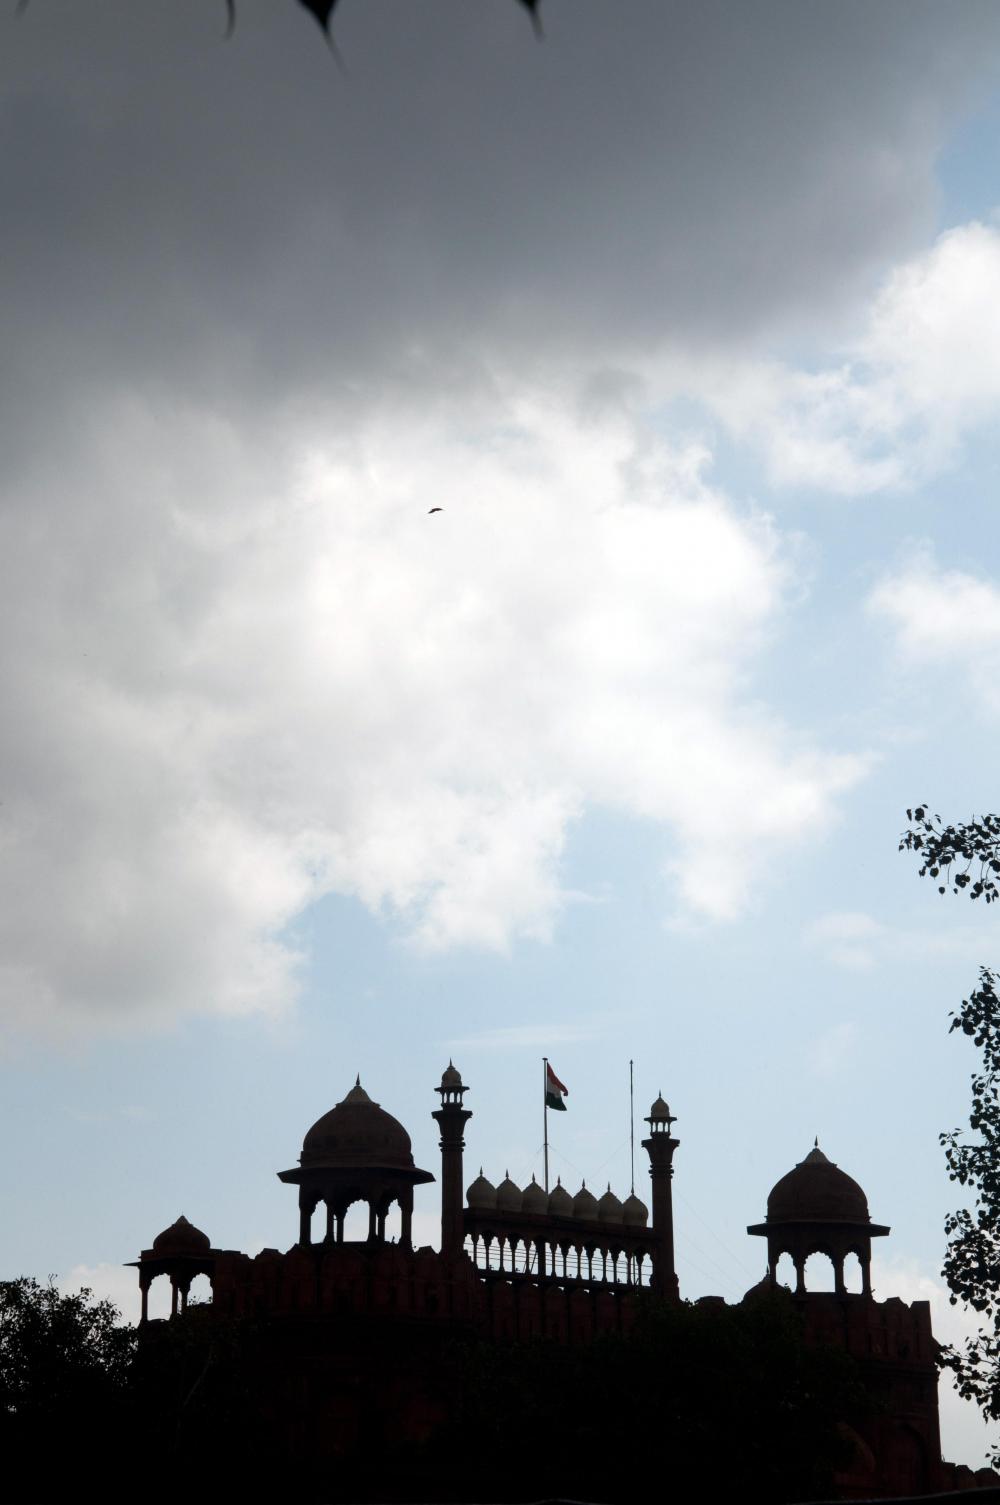 The Weekend Leader - Cloudy sky over Delhi, light rain expected